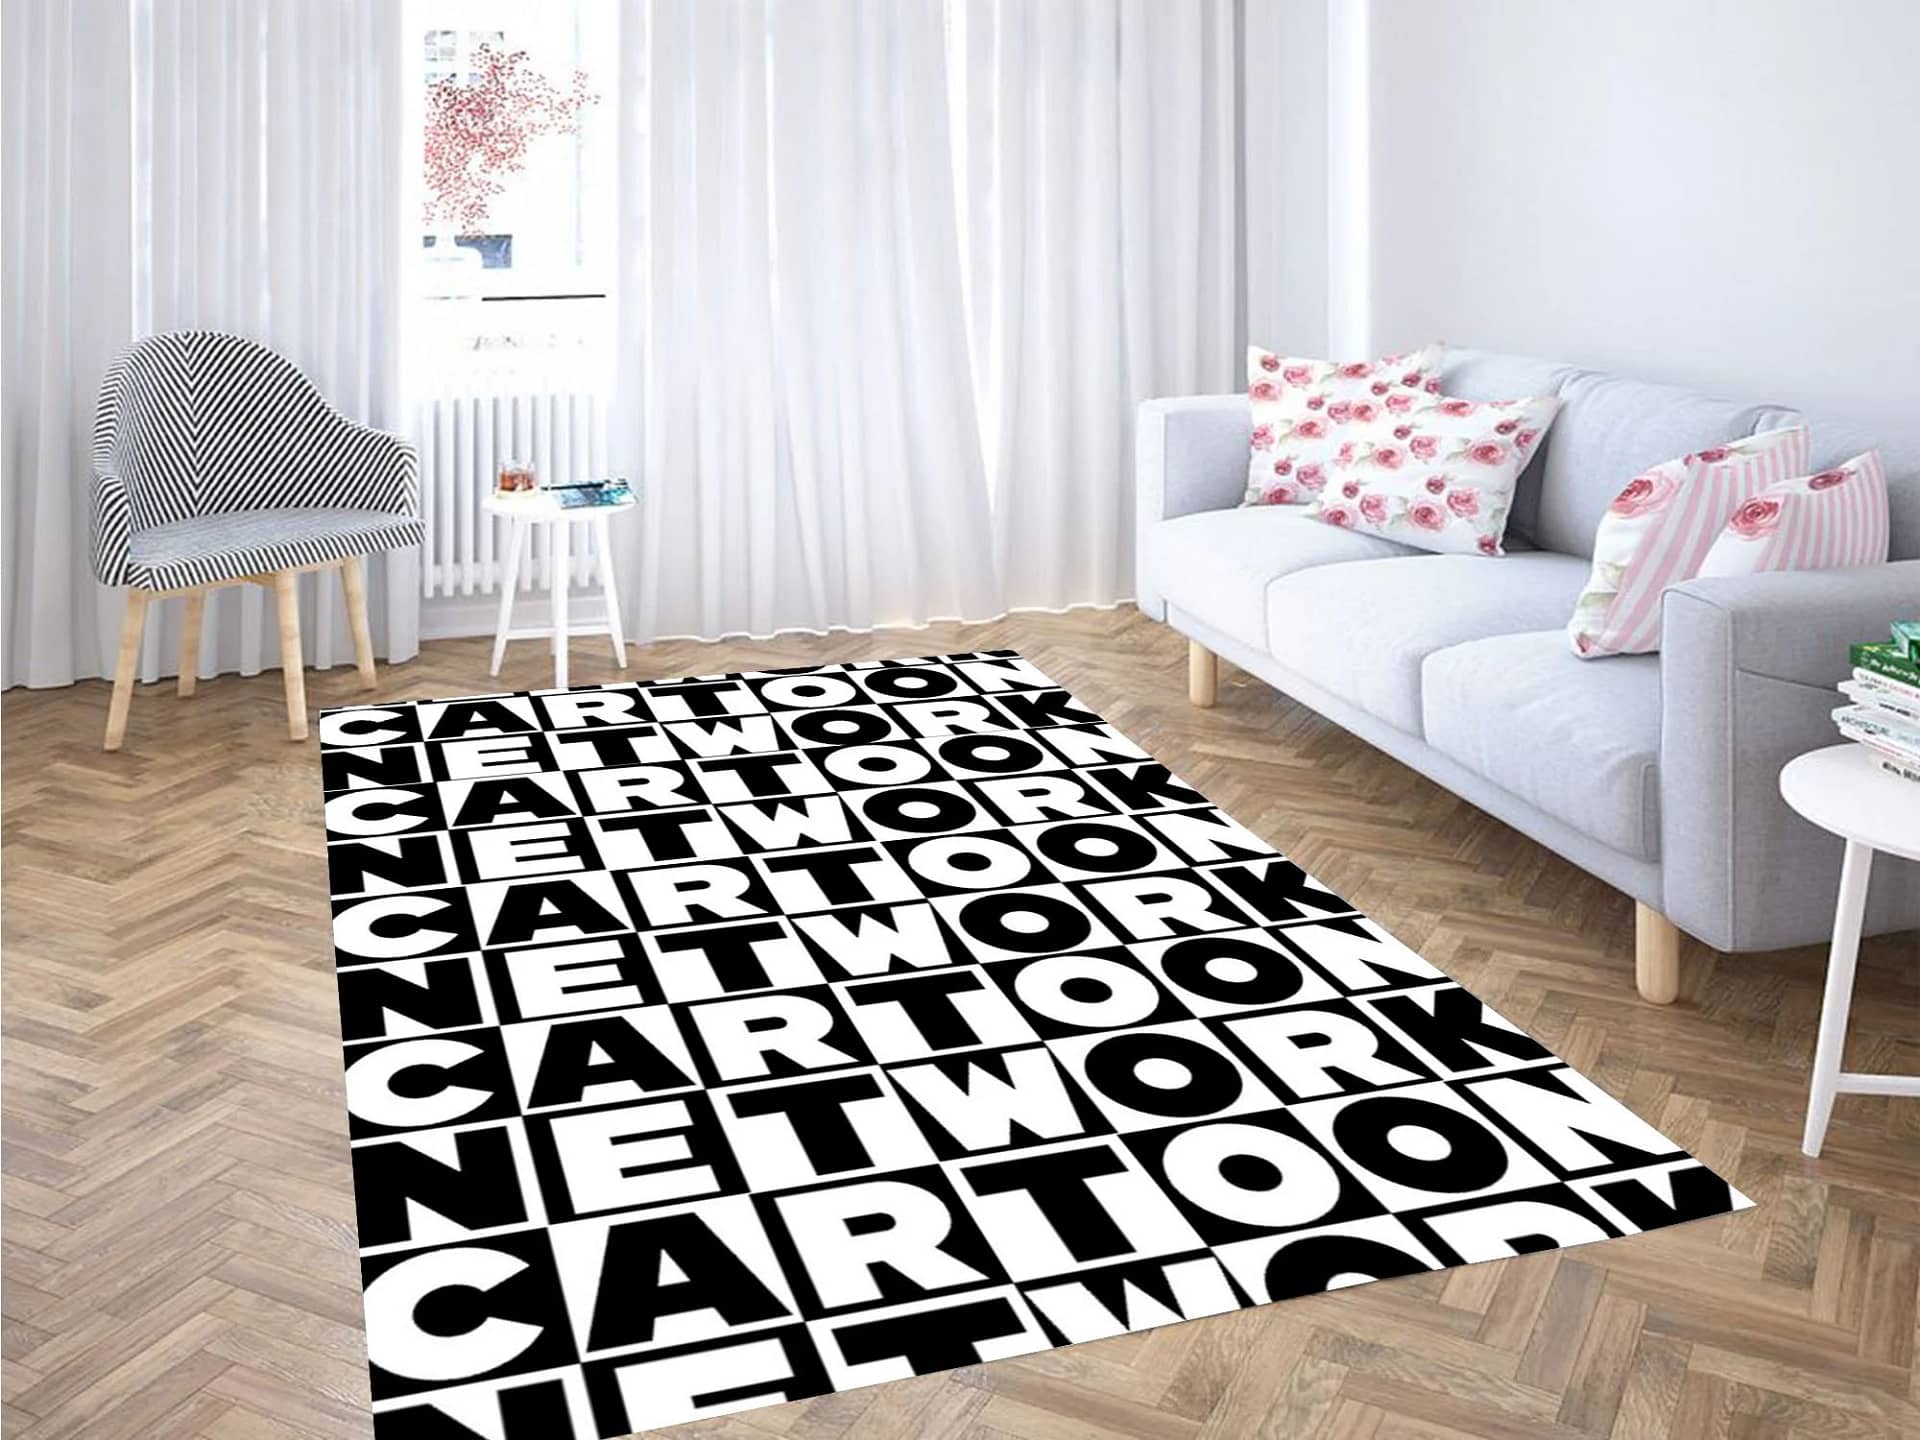 Cartoon Network Pattern Carpet Rug